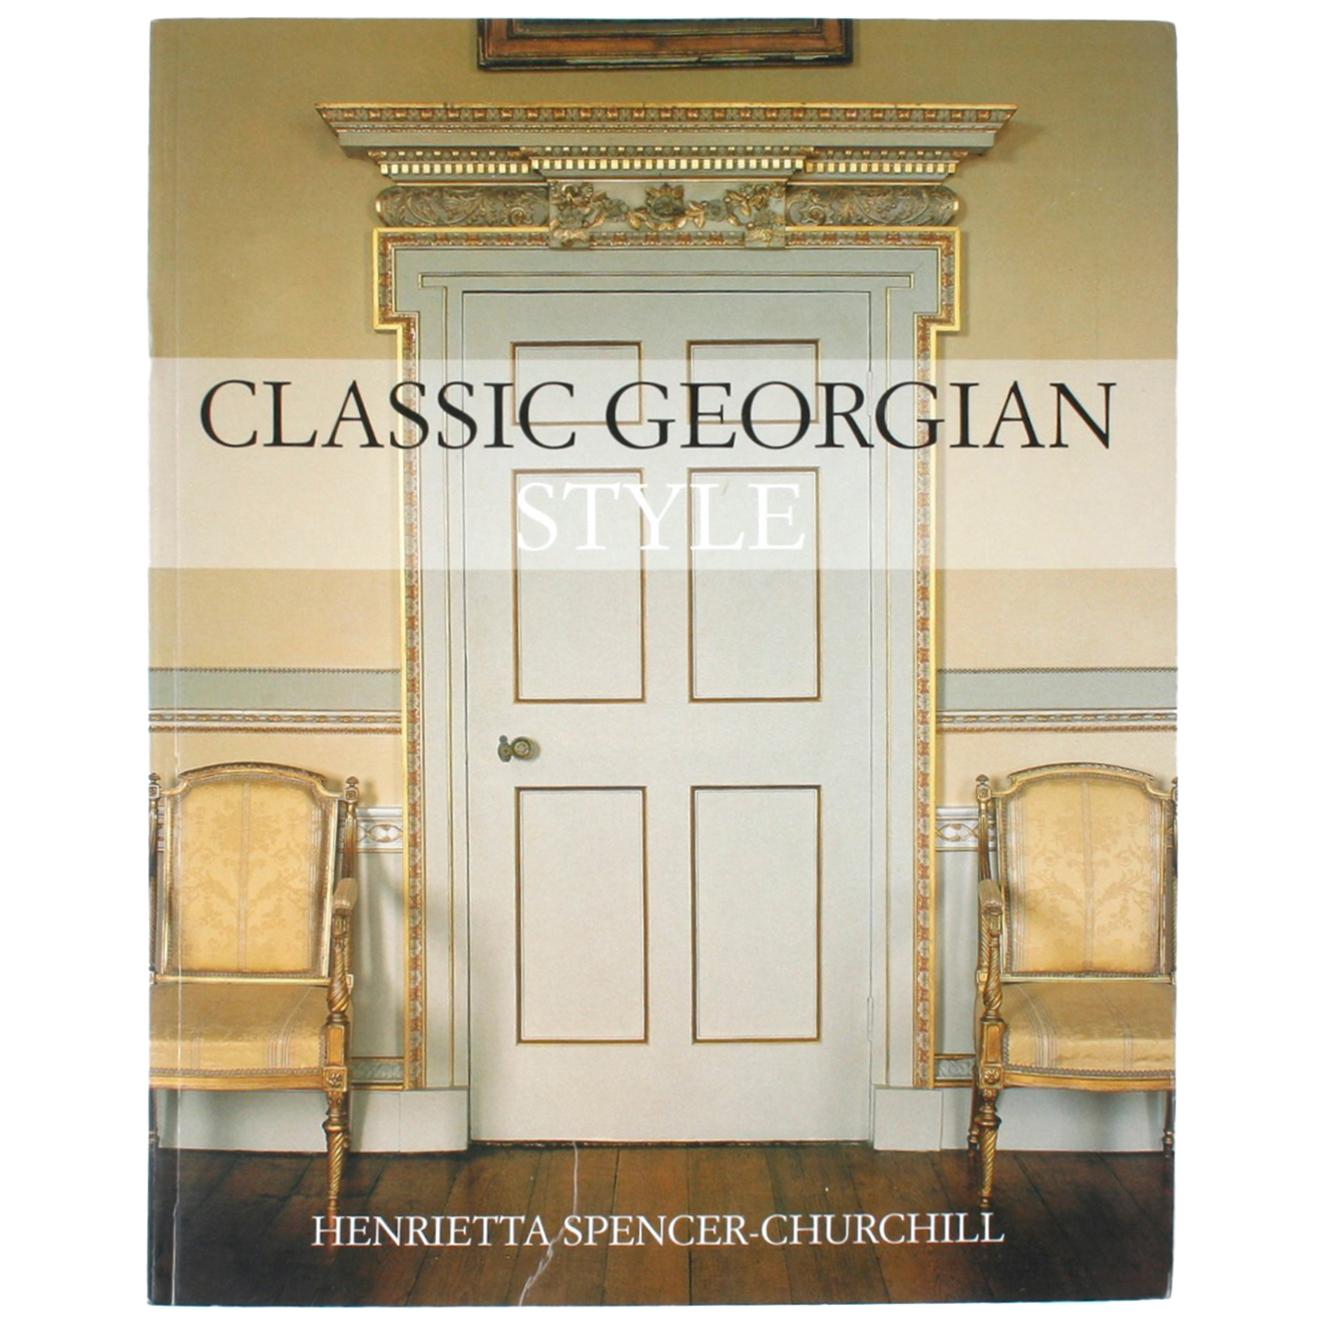 Classic Georgian Style by Henrietta Spencer-Churchill